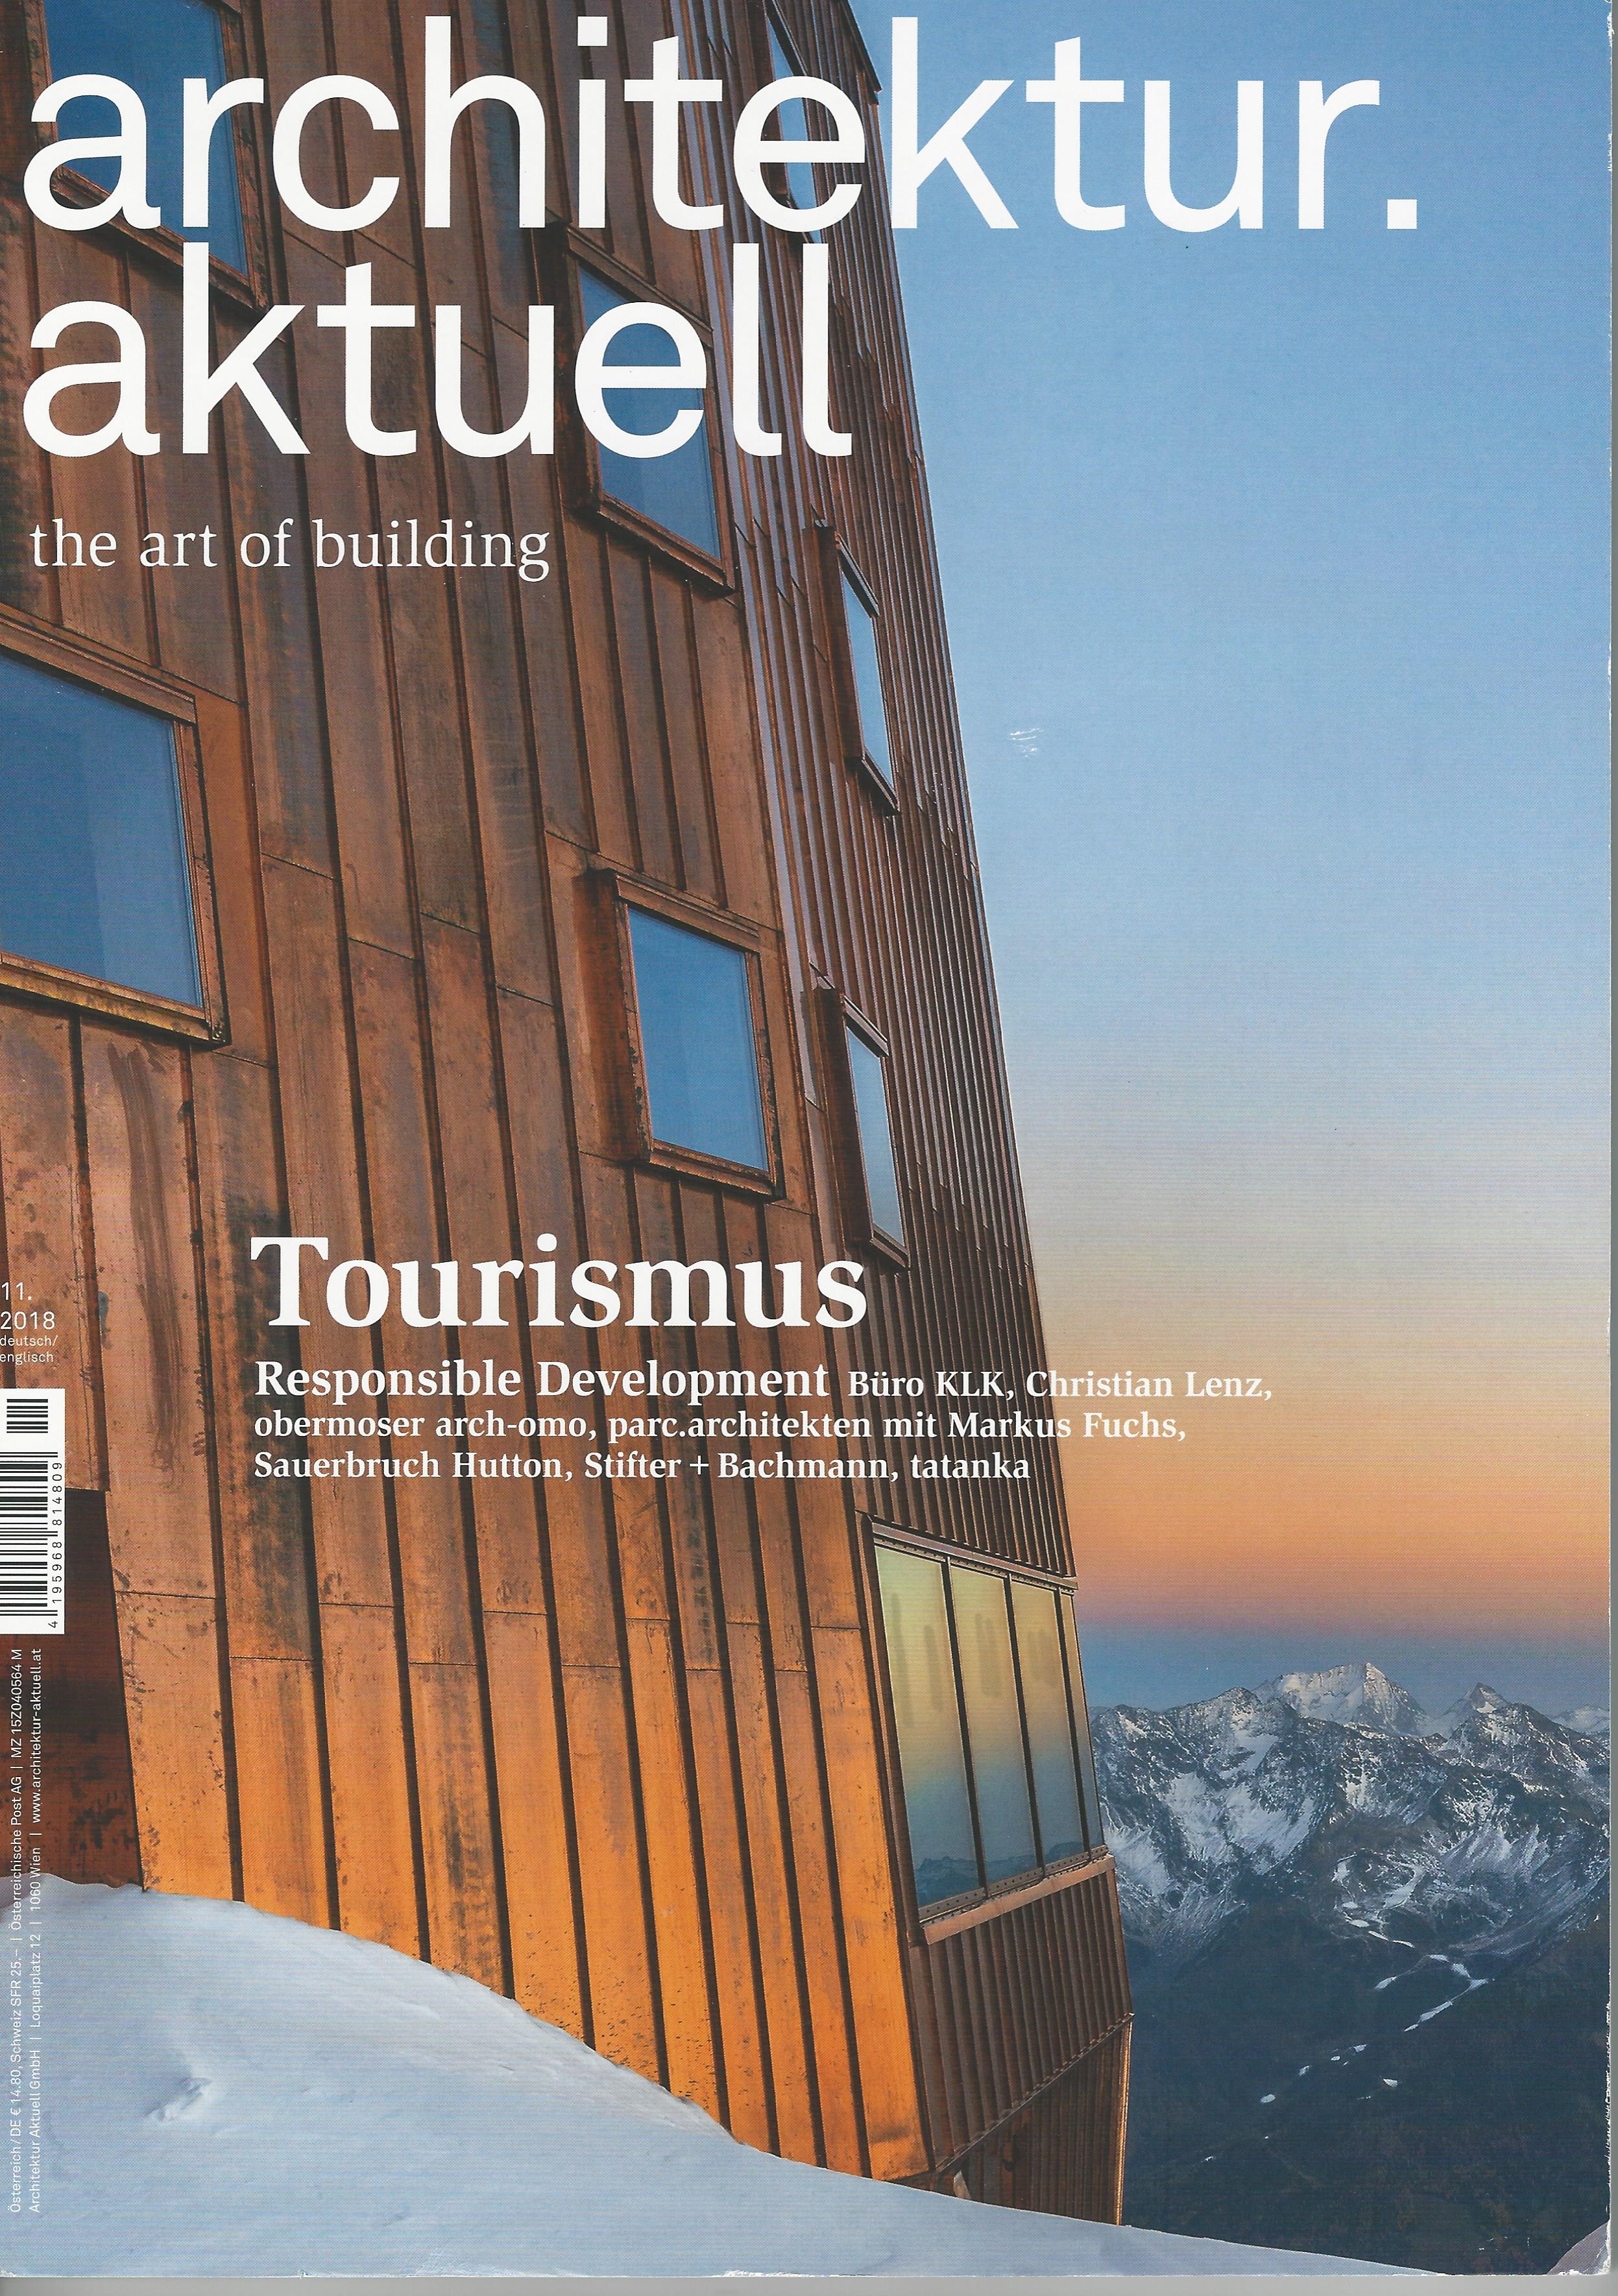 Architektur aktuell, magazine cover, no. 11/2018